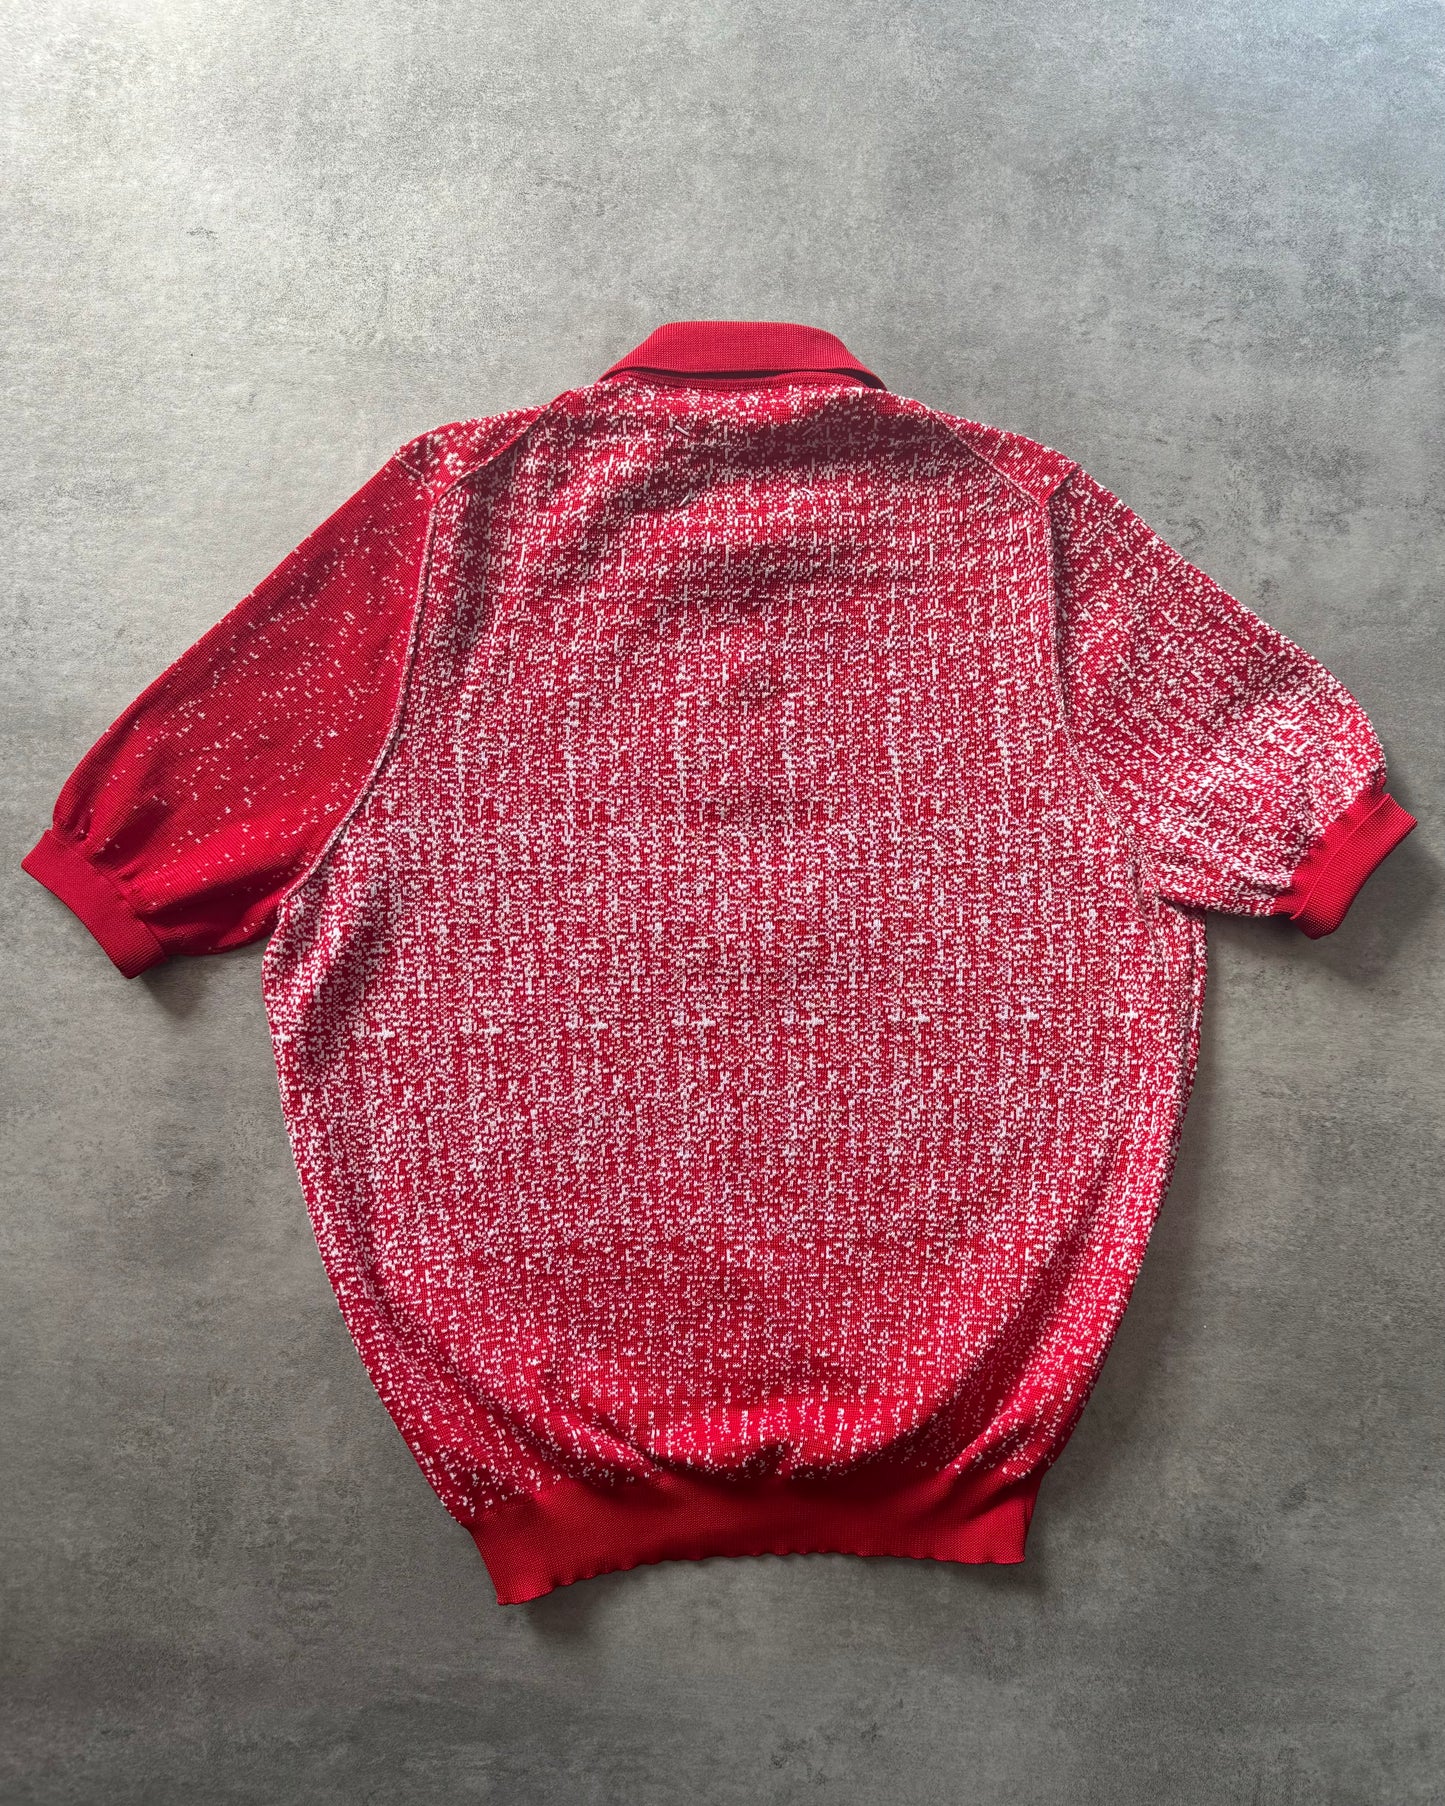 SS2017 Maison Margiela Pixelized Red Human Polo Shirt (S) - 7